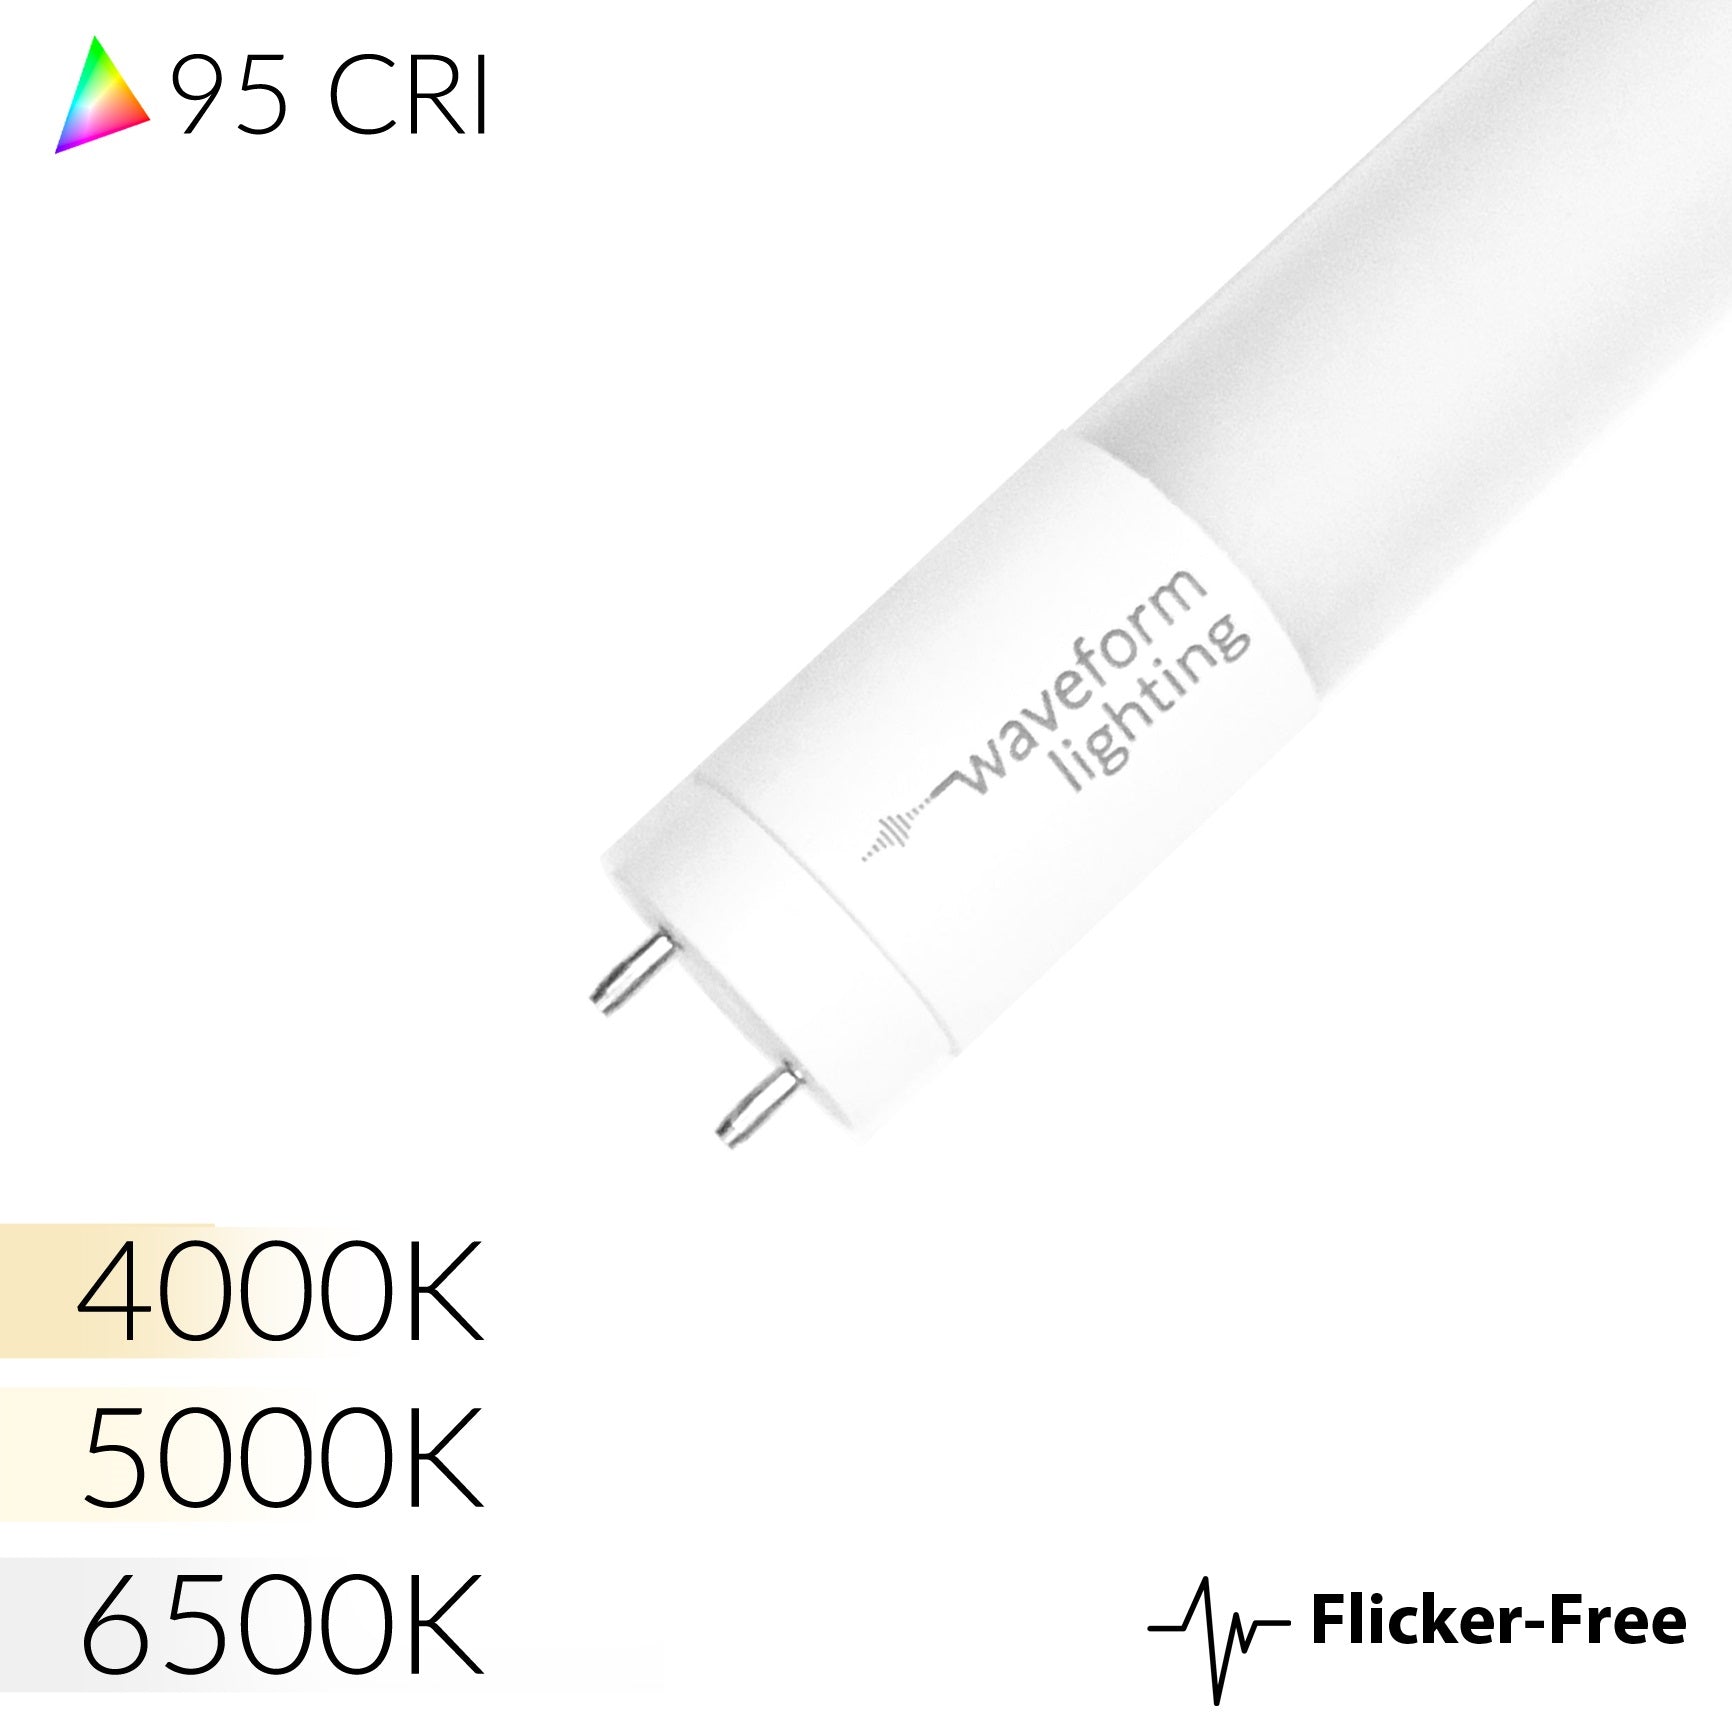 CENTRIC DAYLIGHT™ Spectrum Flicker-Free T8 LED Tube Light – Waveform